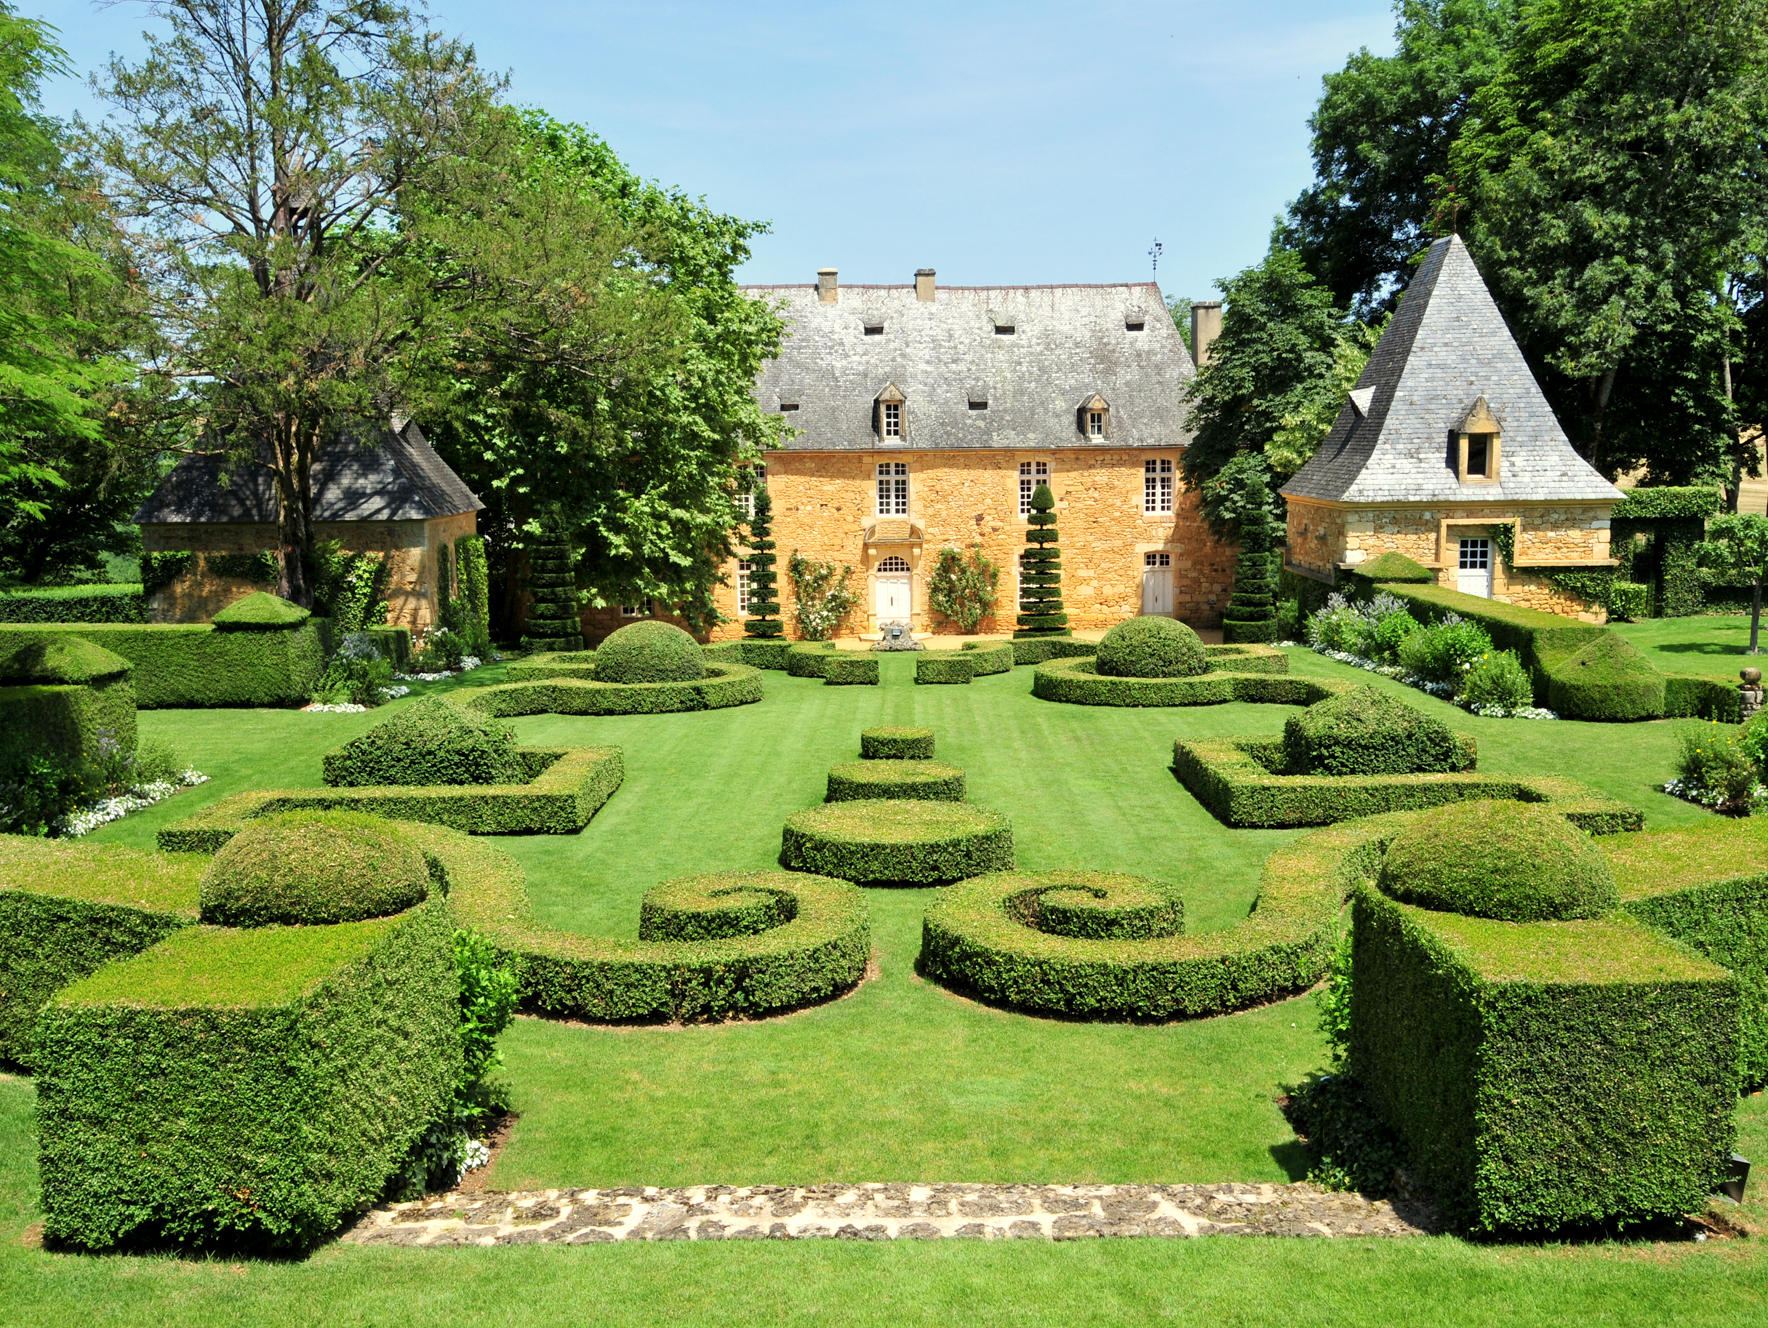 The gardens of Eyrignac © Olivier Anger